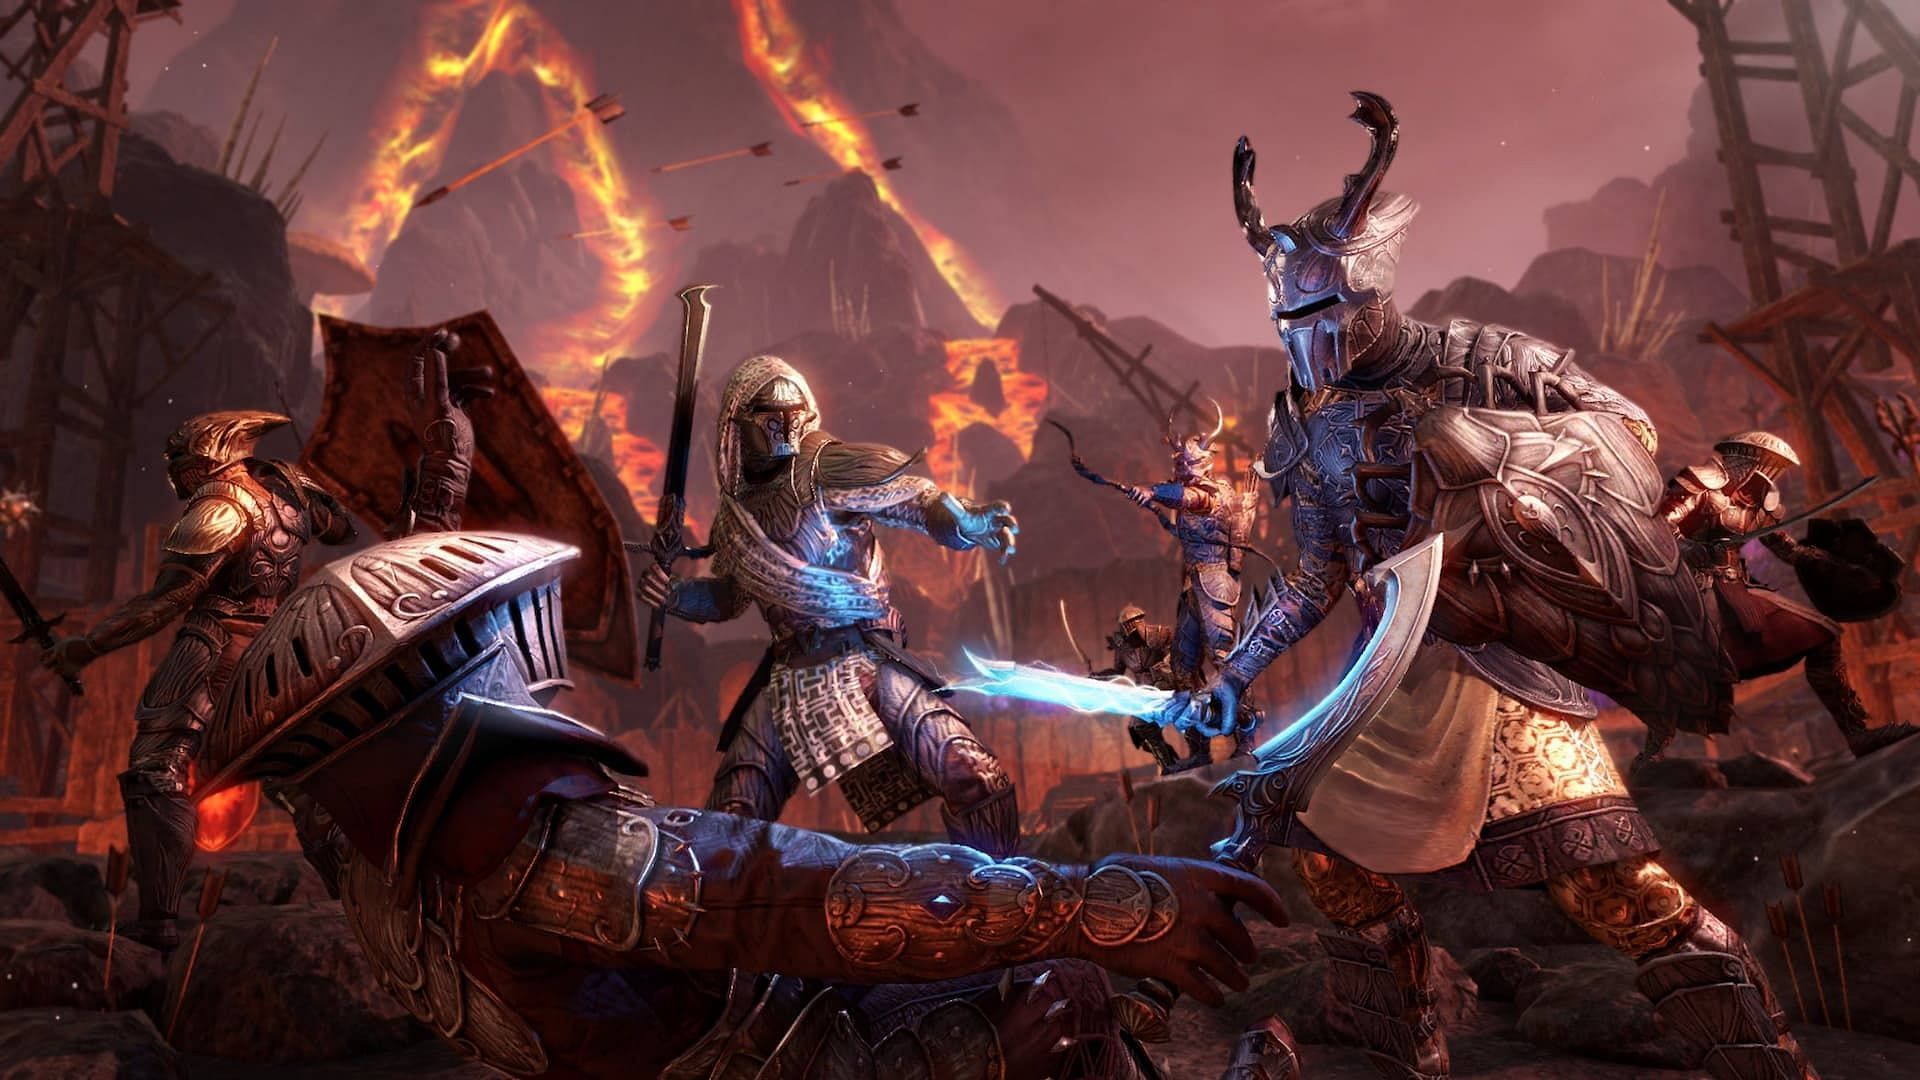 Players battling each other in The Elder Scrolls Online Battlegrounds